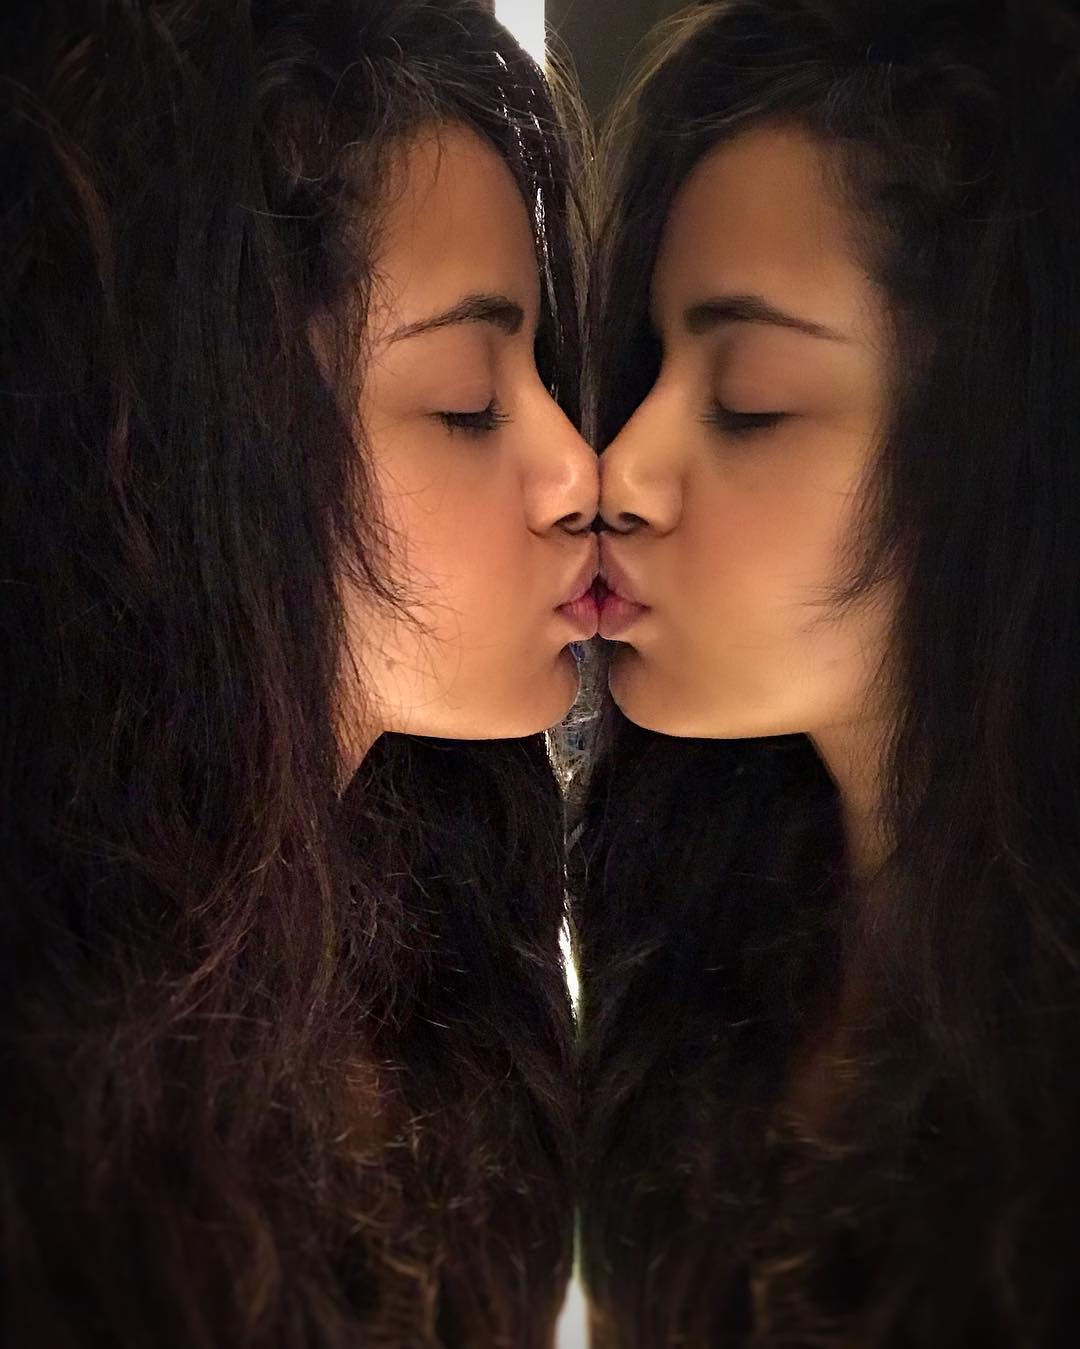 Lesbian indonesia. Две девушки любовь. Поцелуй девушек. Девушки целуются. Поцелуй двух девушек.